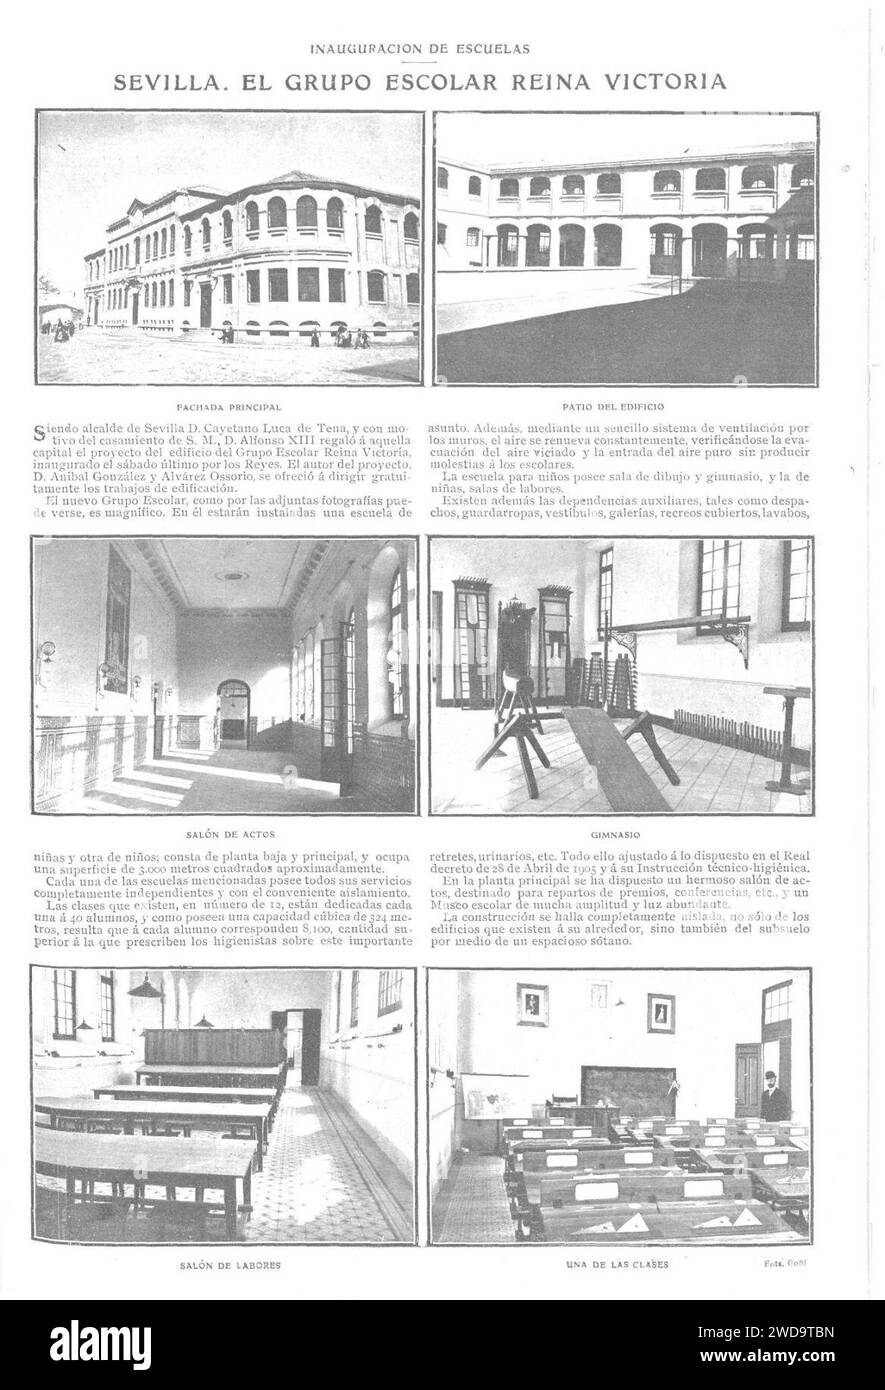 1909-03-24, Actualidades, Inauguración de escuelas, Sevilla, El grupo escolar Reina Victoria, Goñi. Stock Photo